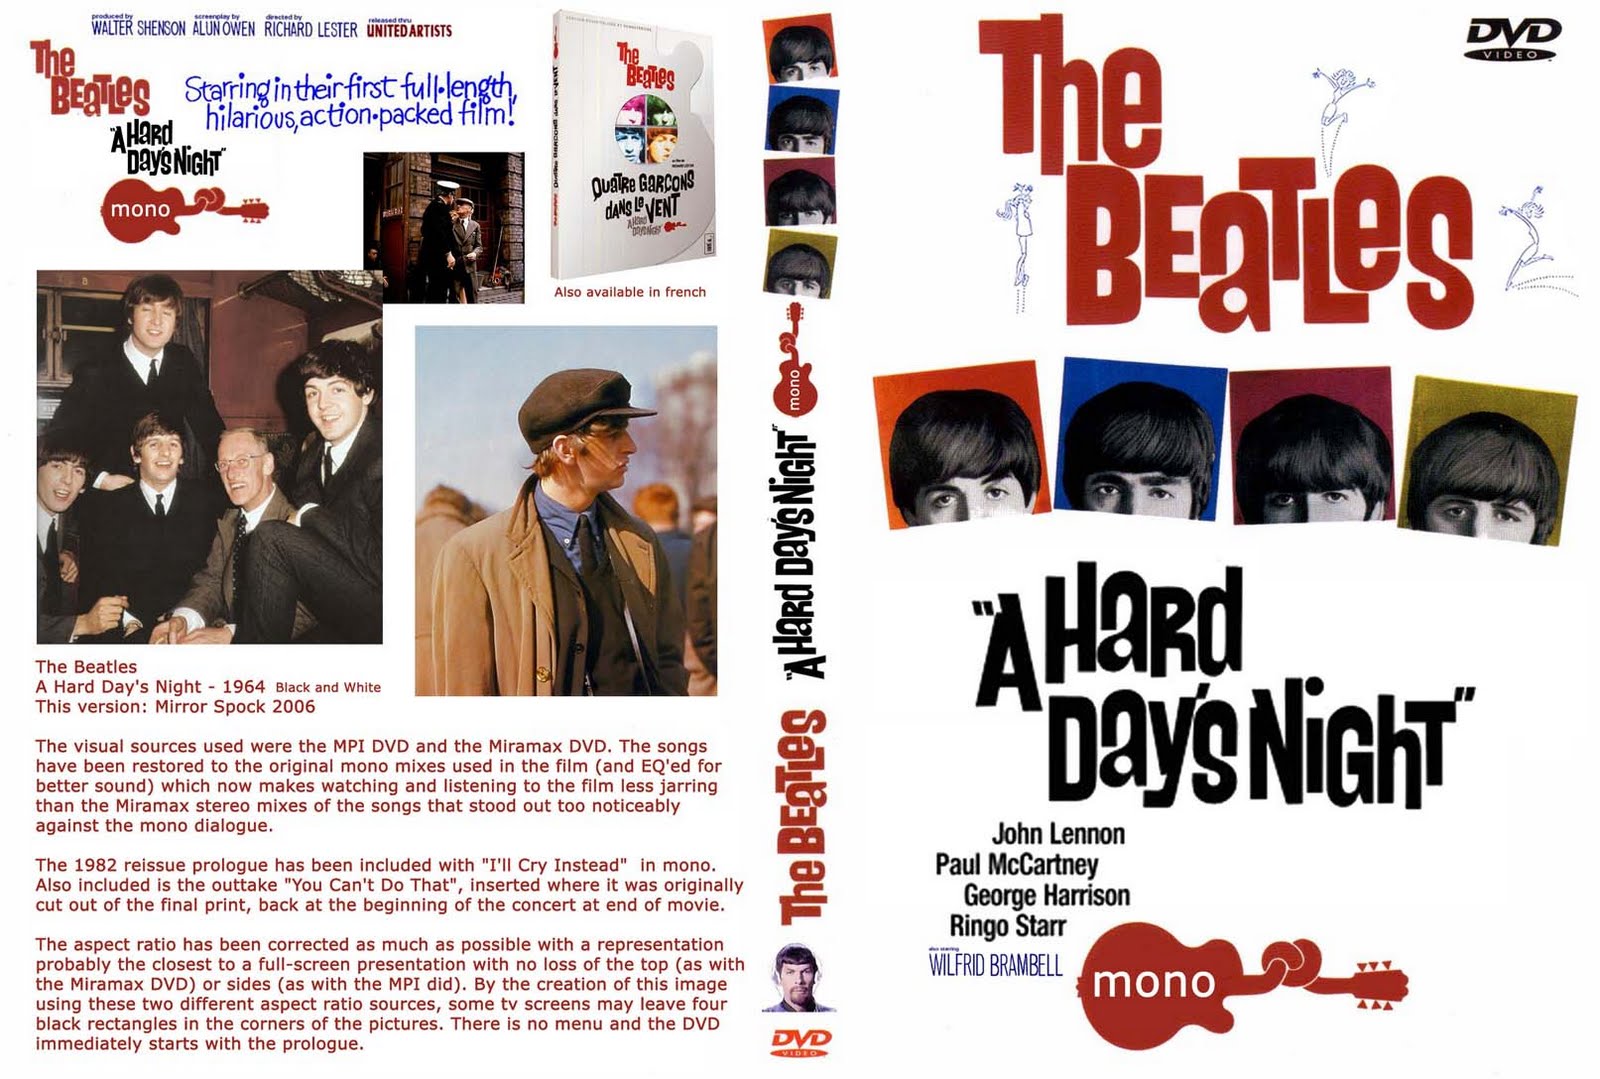 The beatles a hard day s night. Битлз 1964 a hard Day's Night. The Beatles a hard Day's Night обложка. The Beatles: вечер трудного дня.